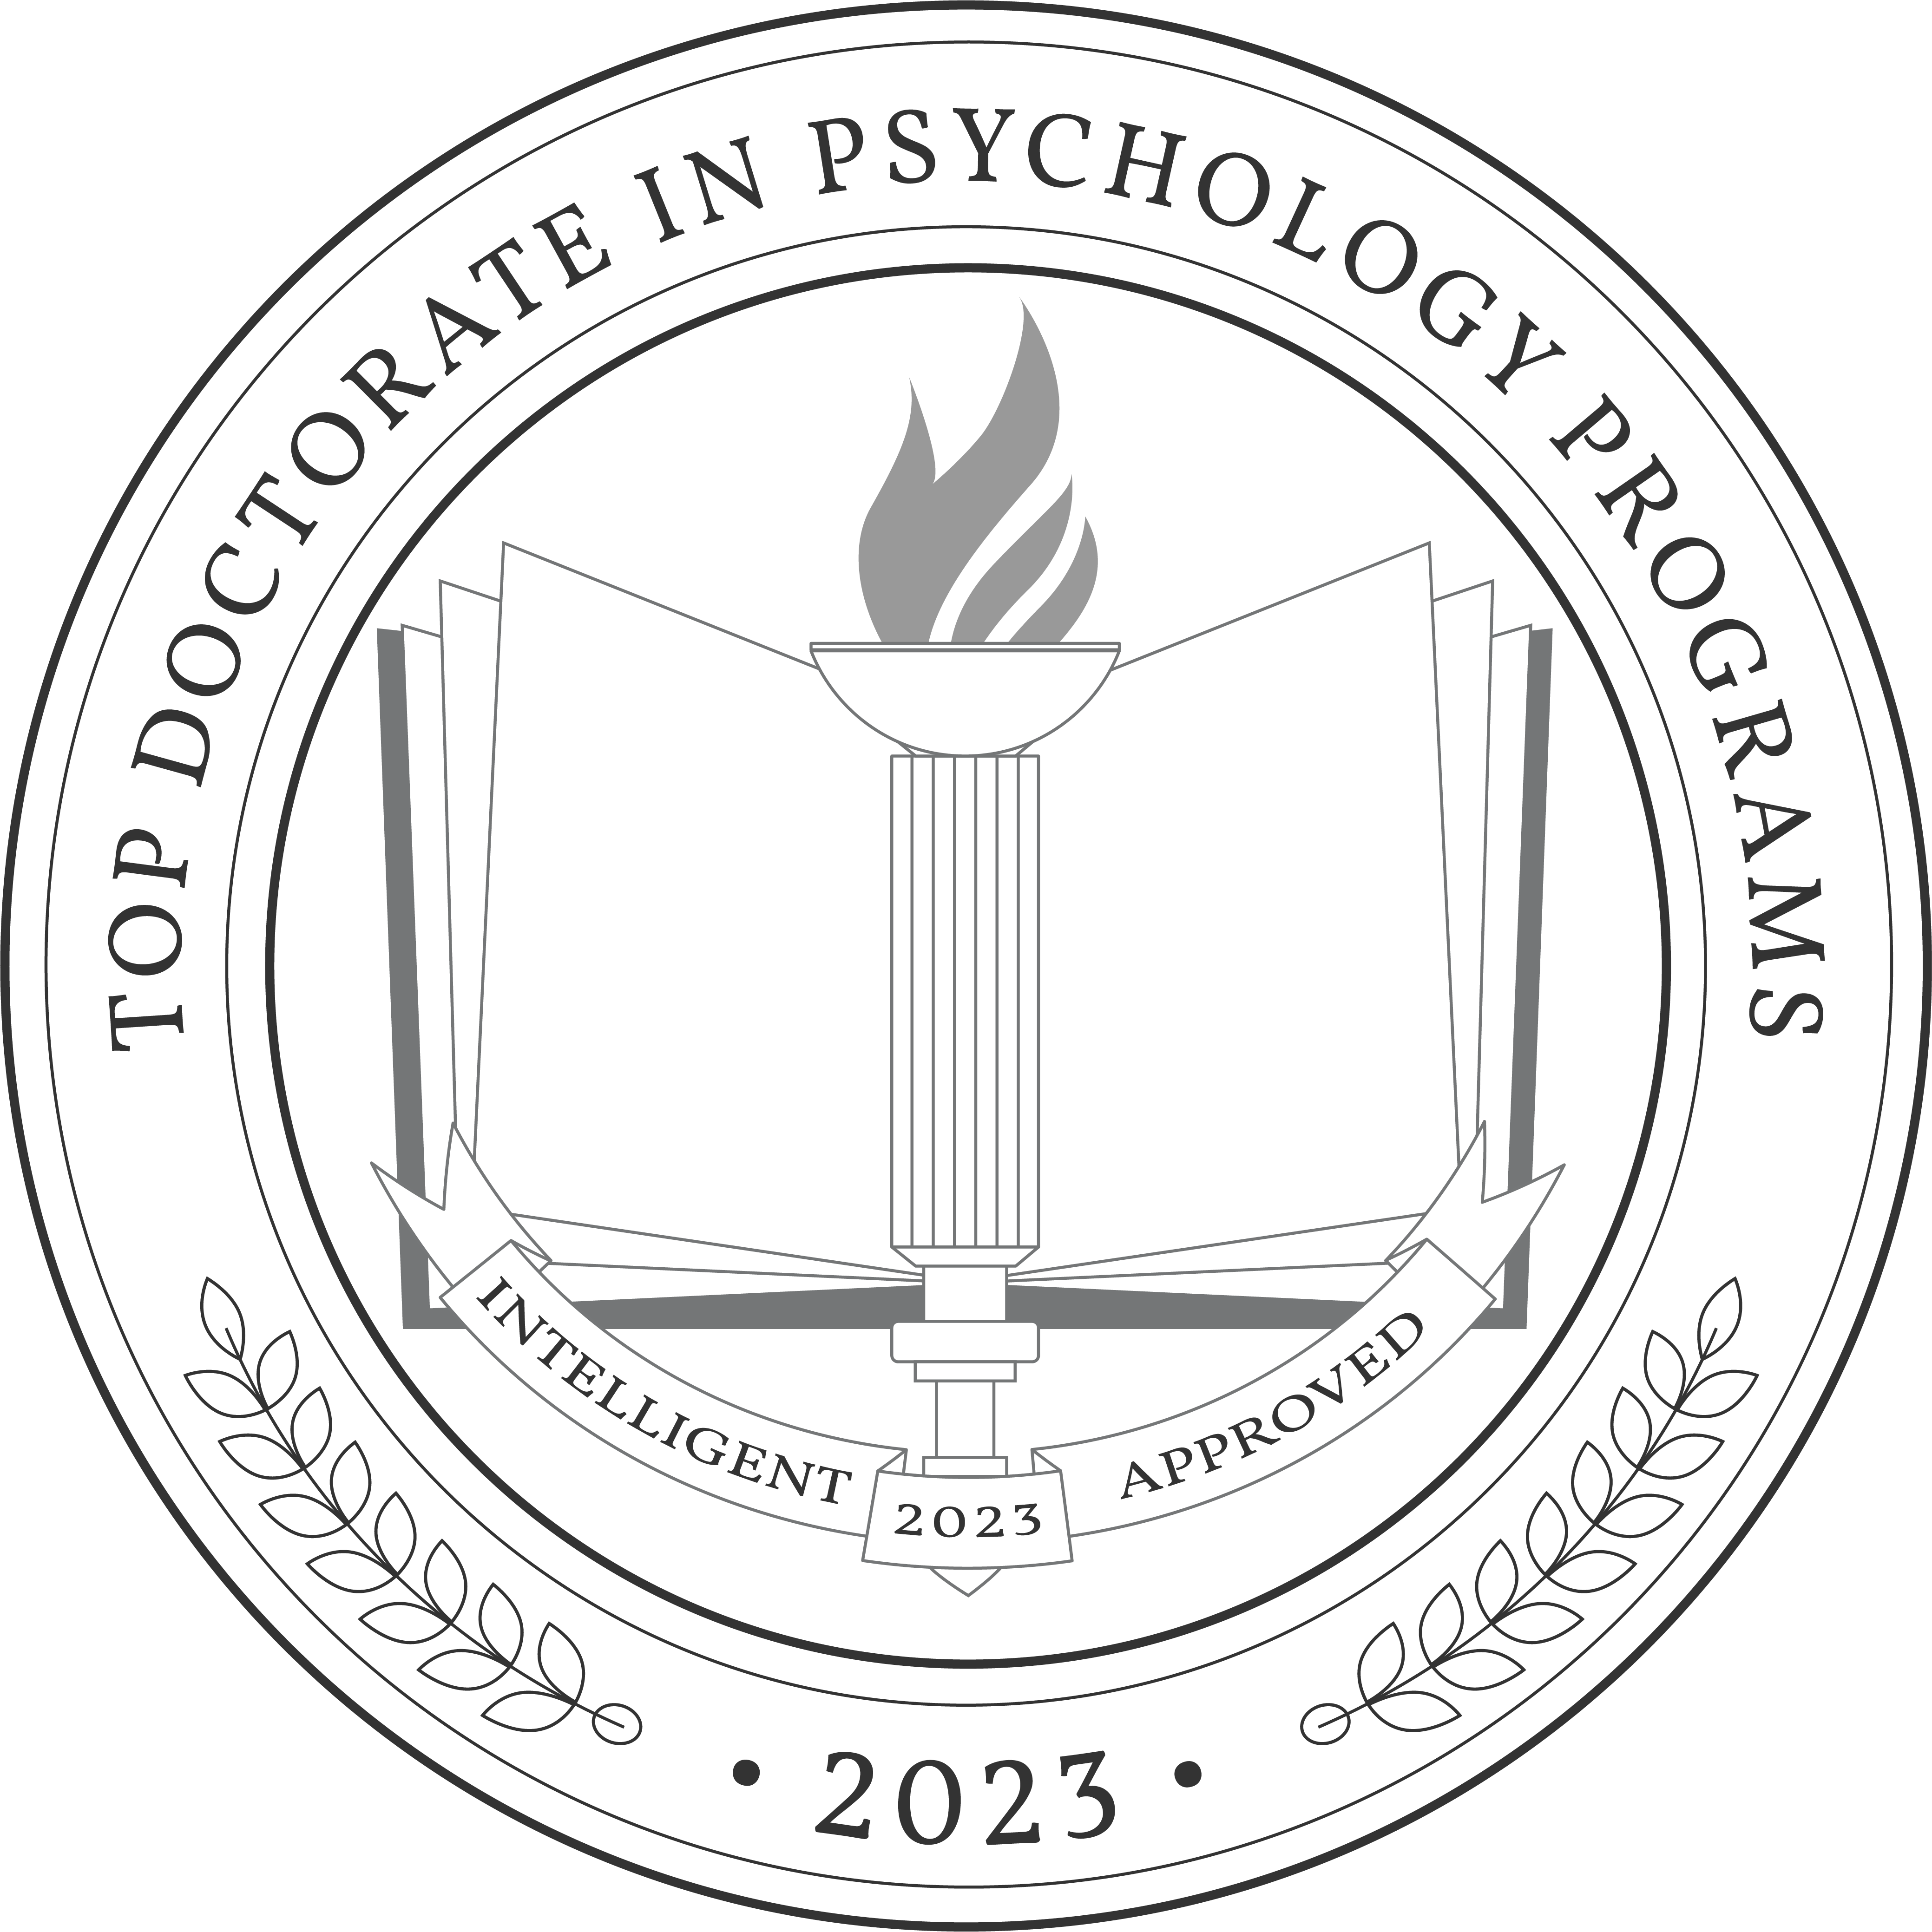 Top Doctorate In Psychology Programs 2023 Badge 